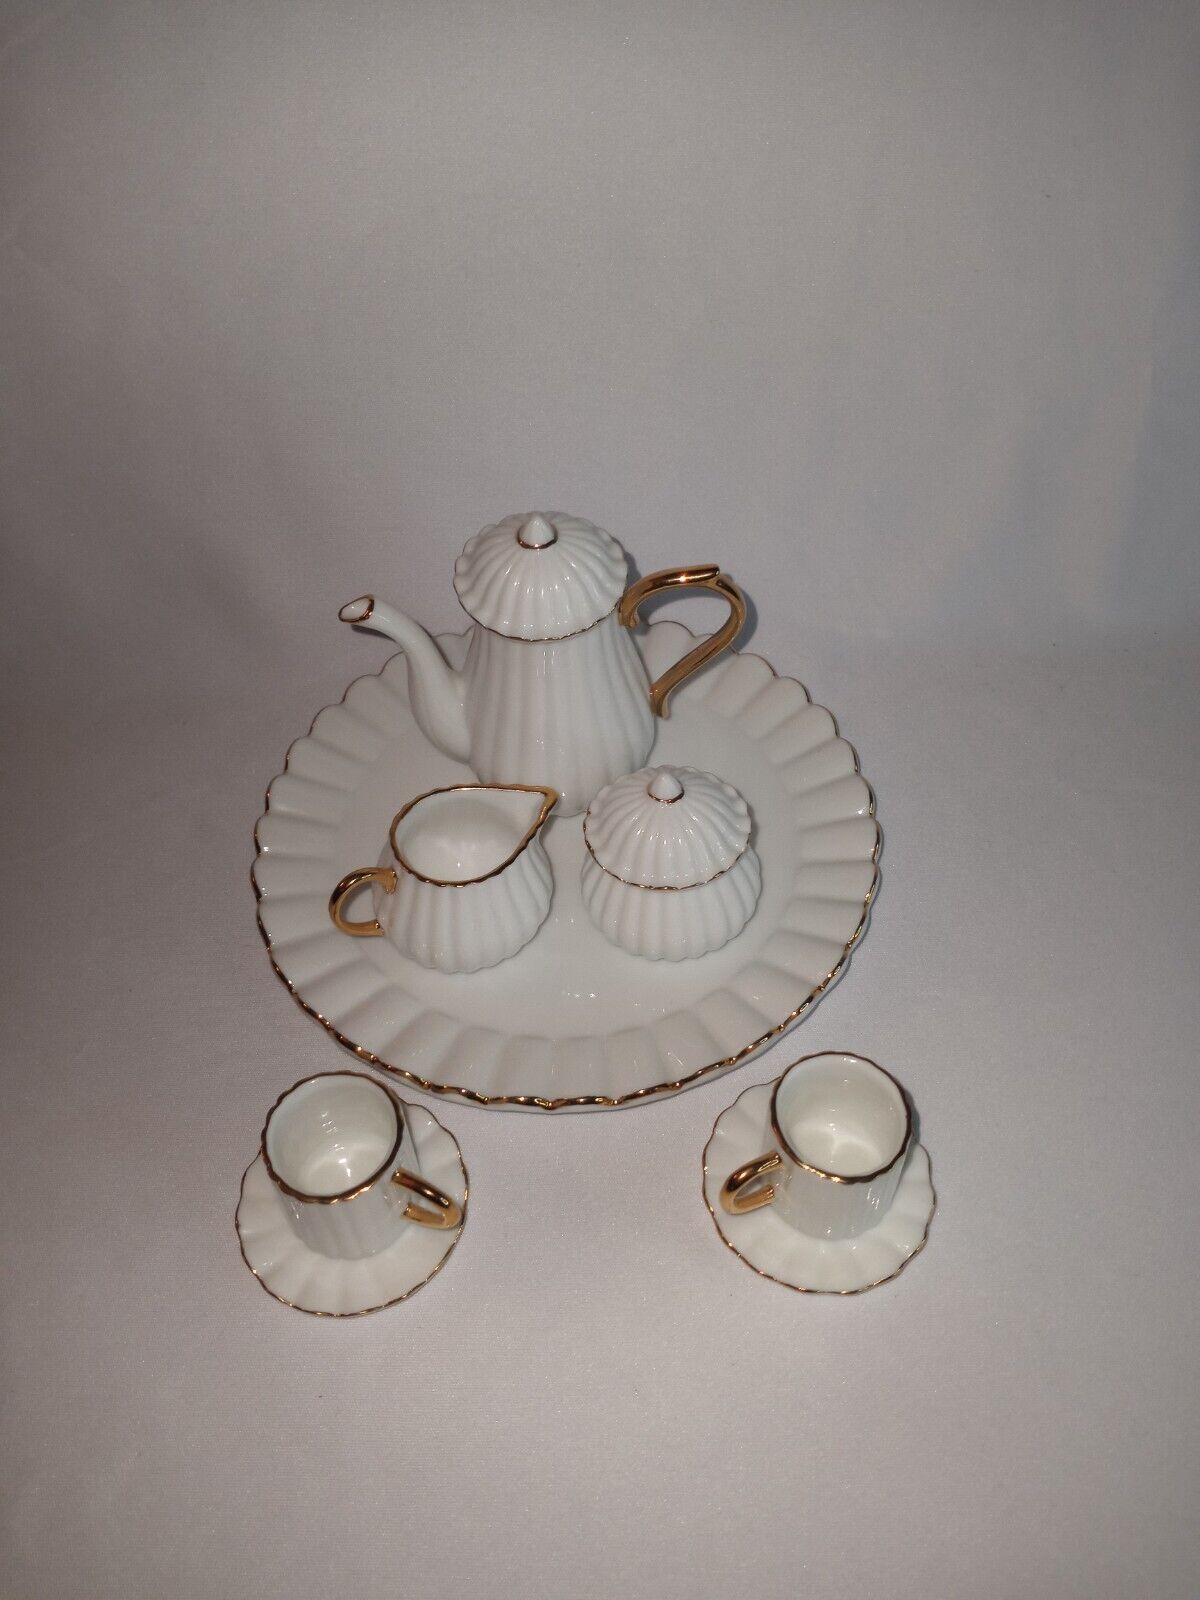 Miniature Tea Set Decorative Shaped, All White With Gold Trim